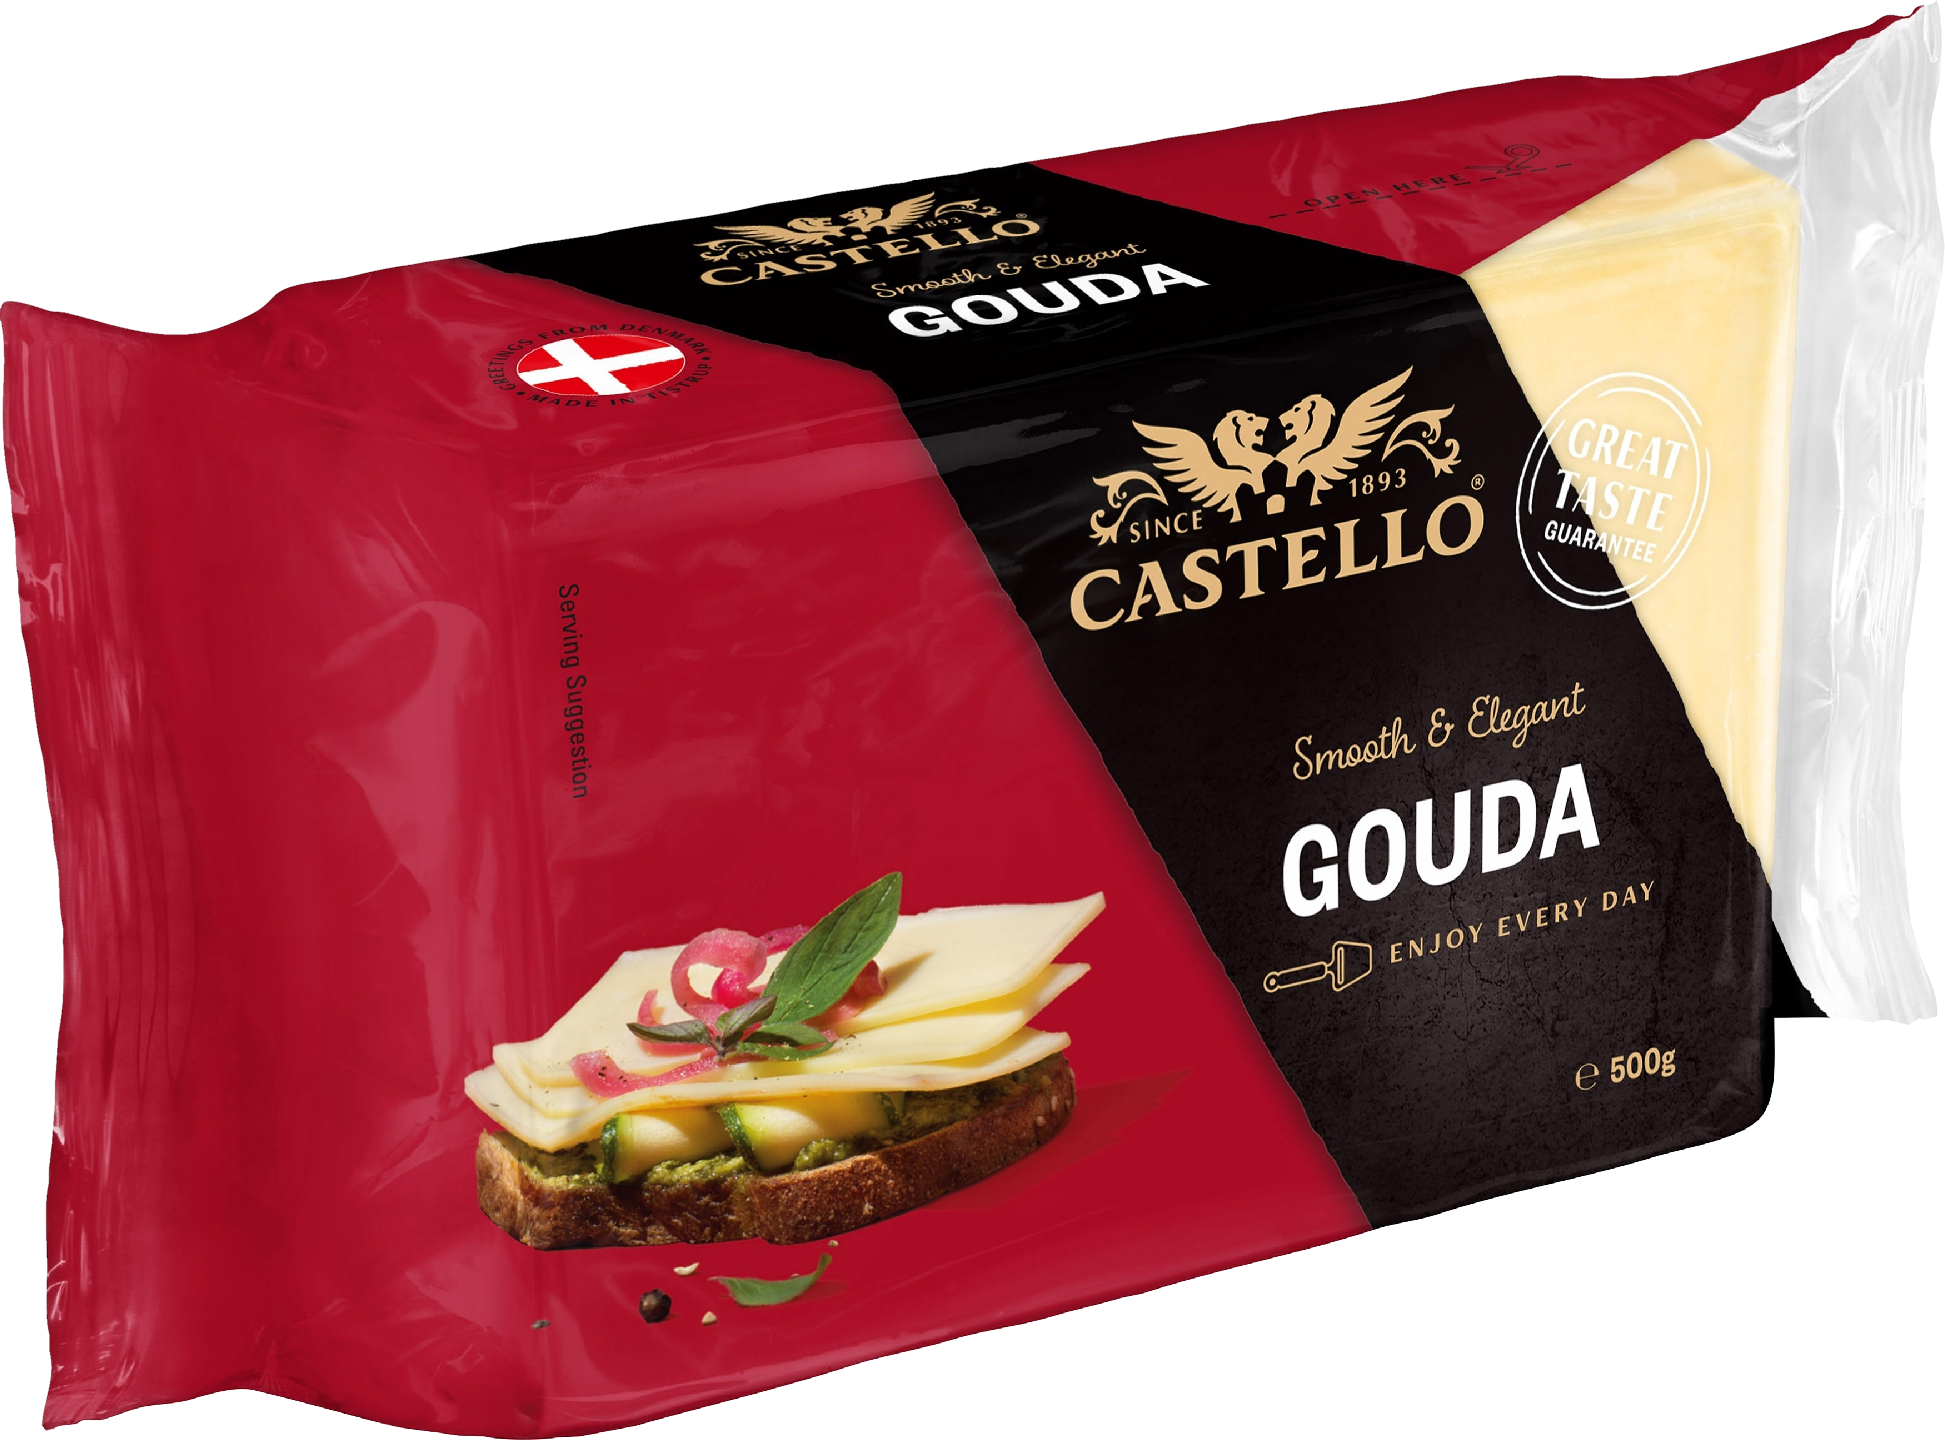 Castello masterfully matured gouda 500g